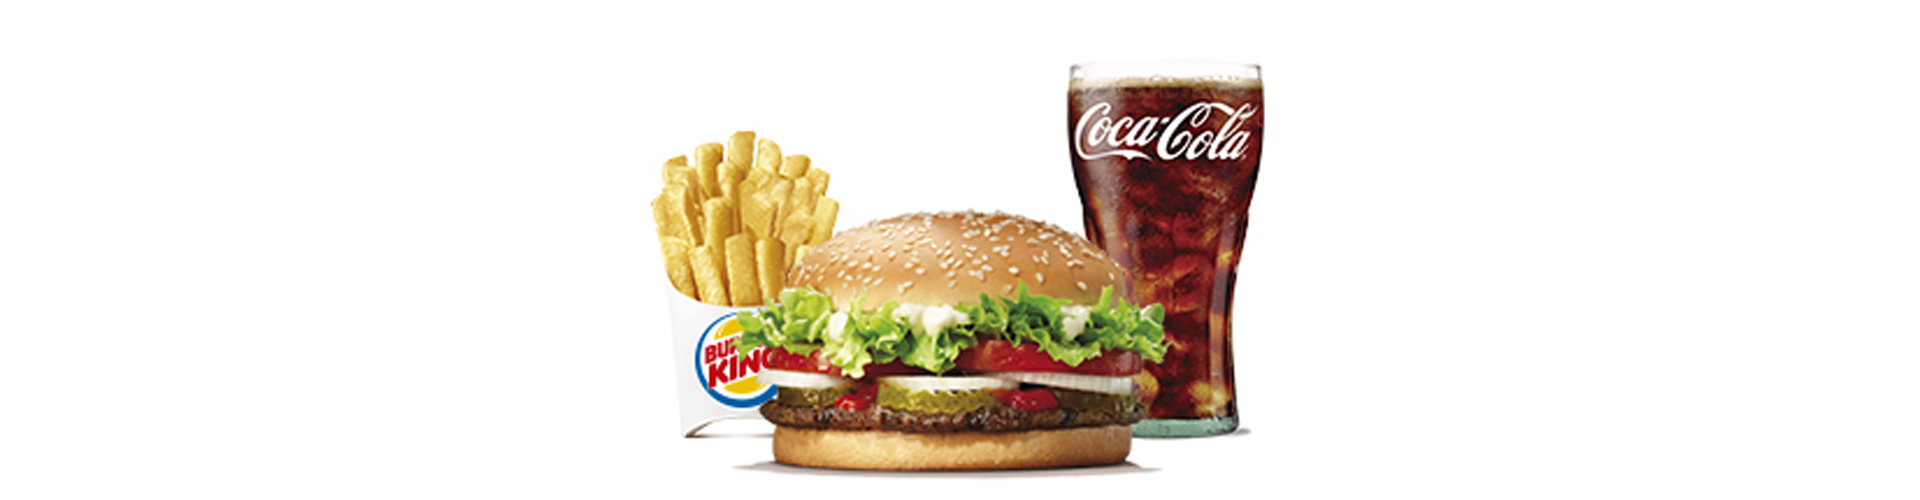 burgerking-40001707-sprite-ensalada